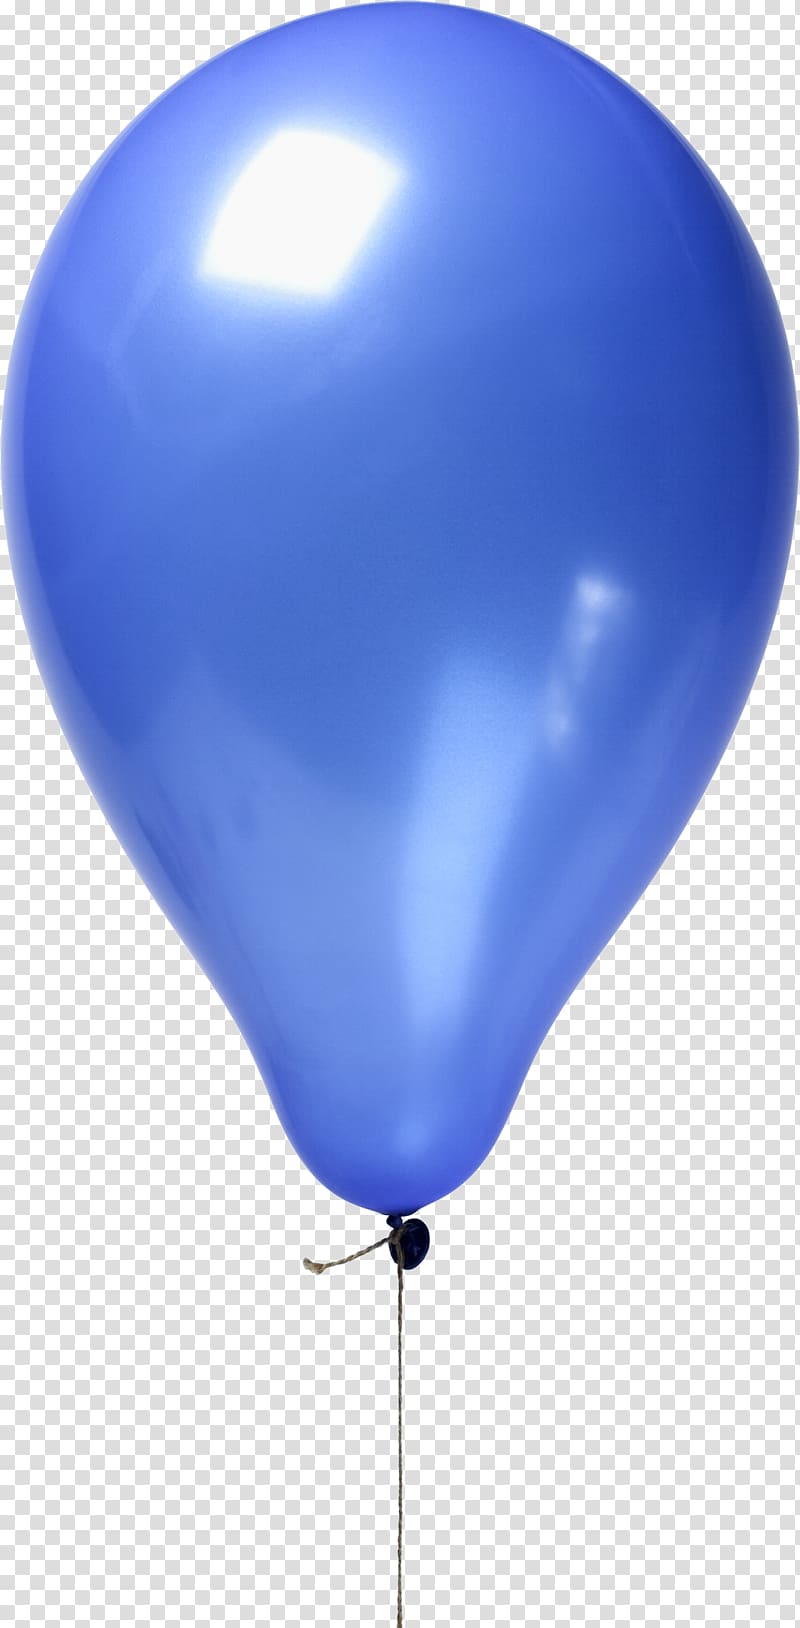 Balloon boy hoax Hot air balloon, balloon transparent background PNG clipart